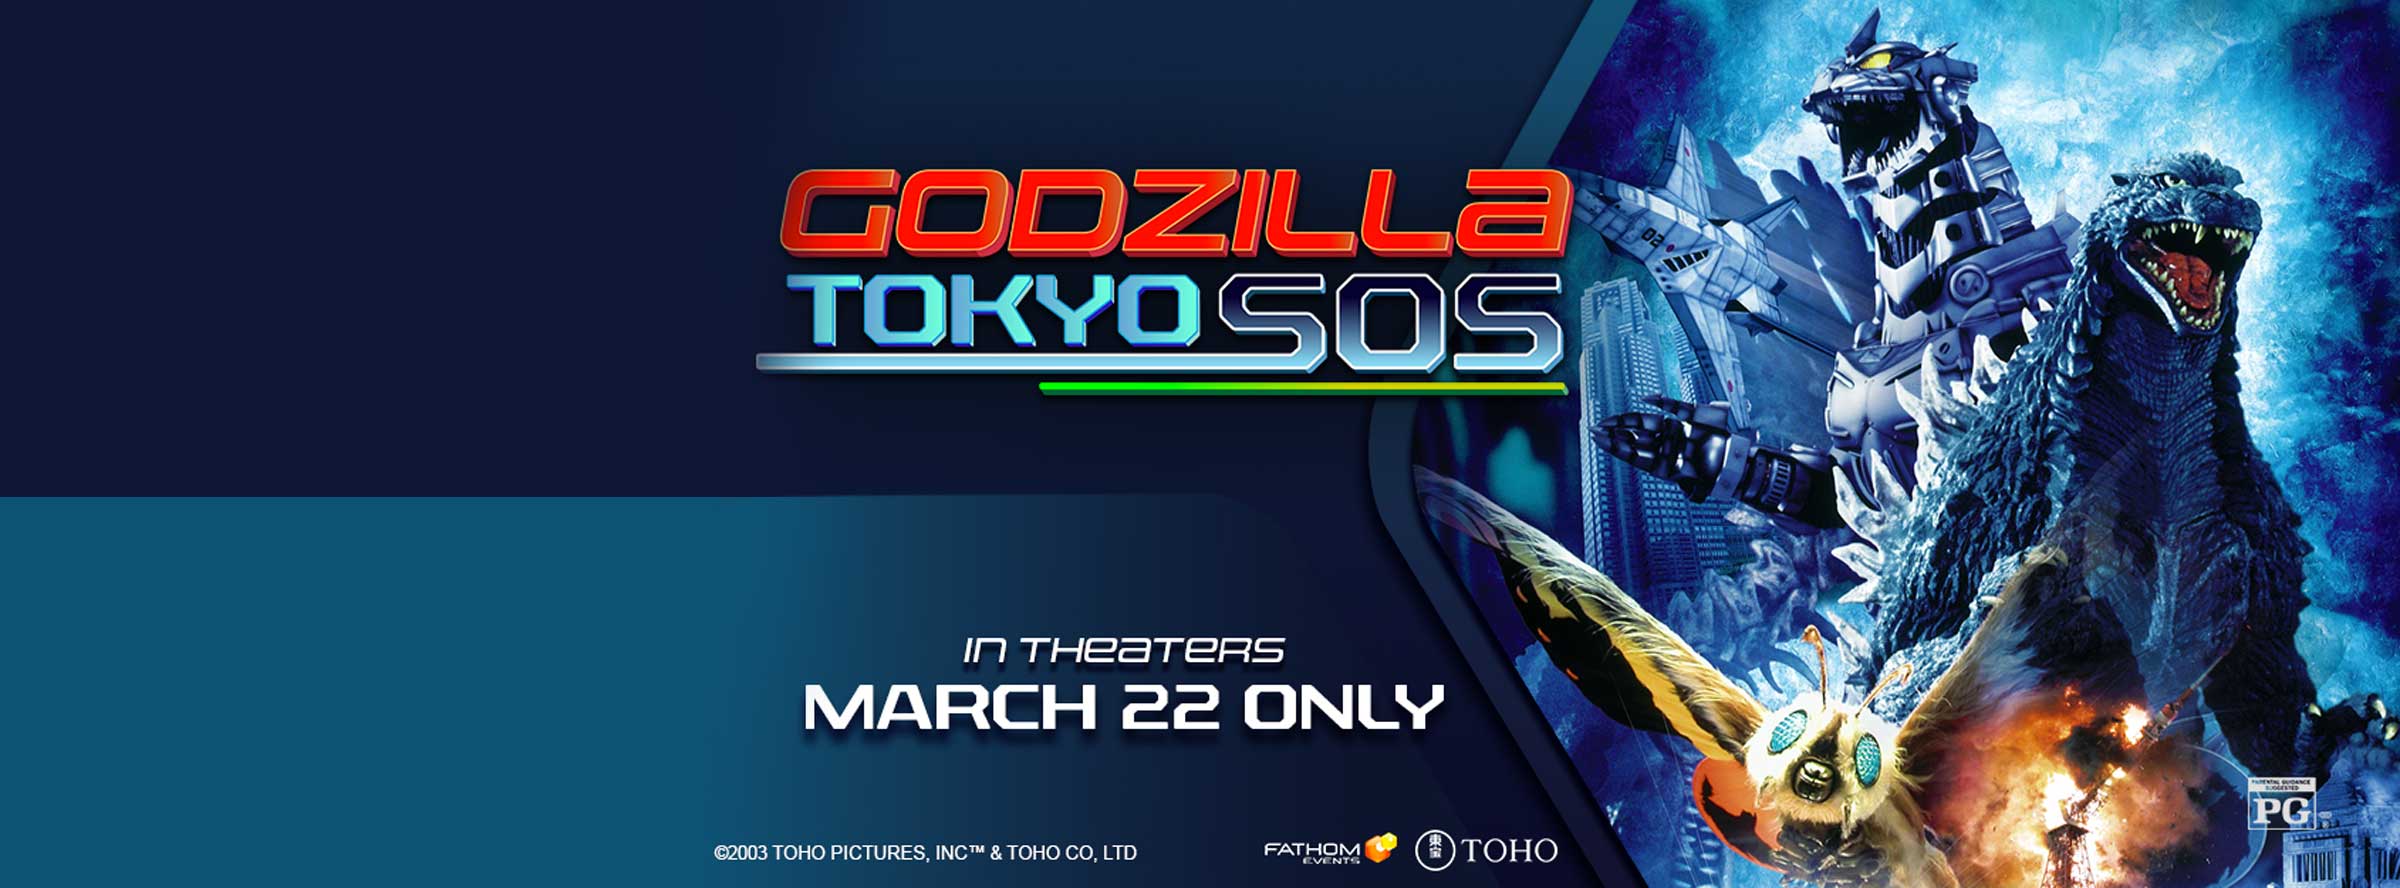 Slider Image for Godzilla: Tokyo SOS (Fathom Event)